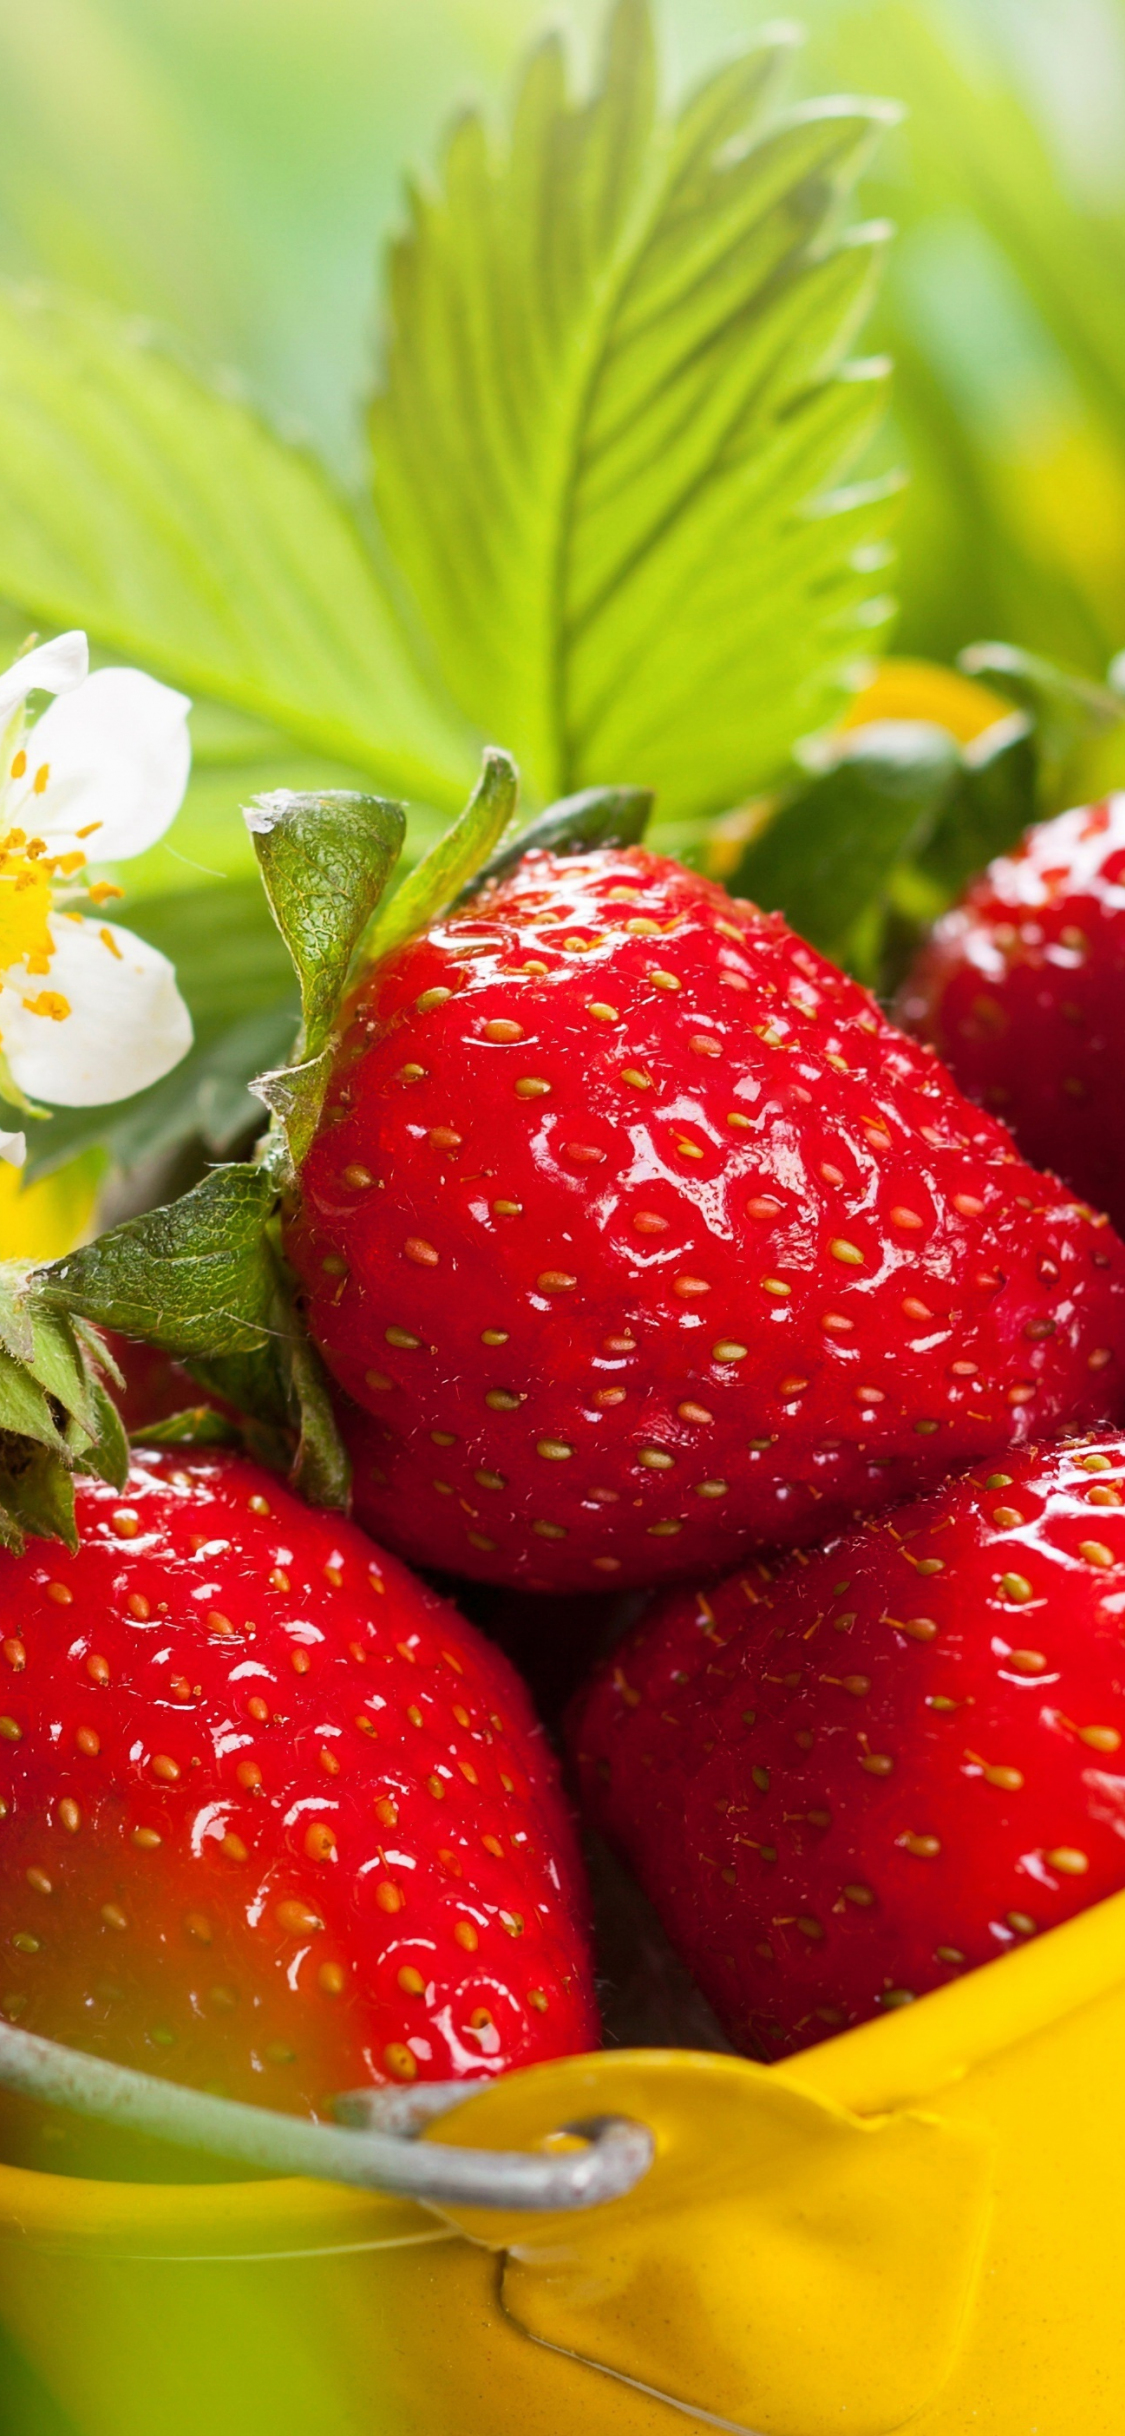 Download 1125x2436 wallpaper strawberries, basket, fresh fruits, iphone x 1125x2436 HD image, background, 5260